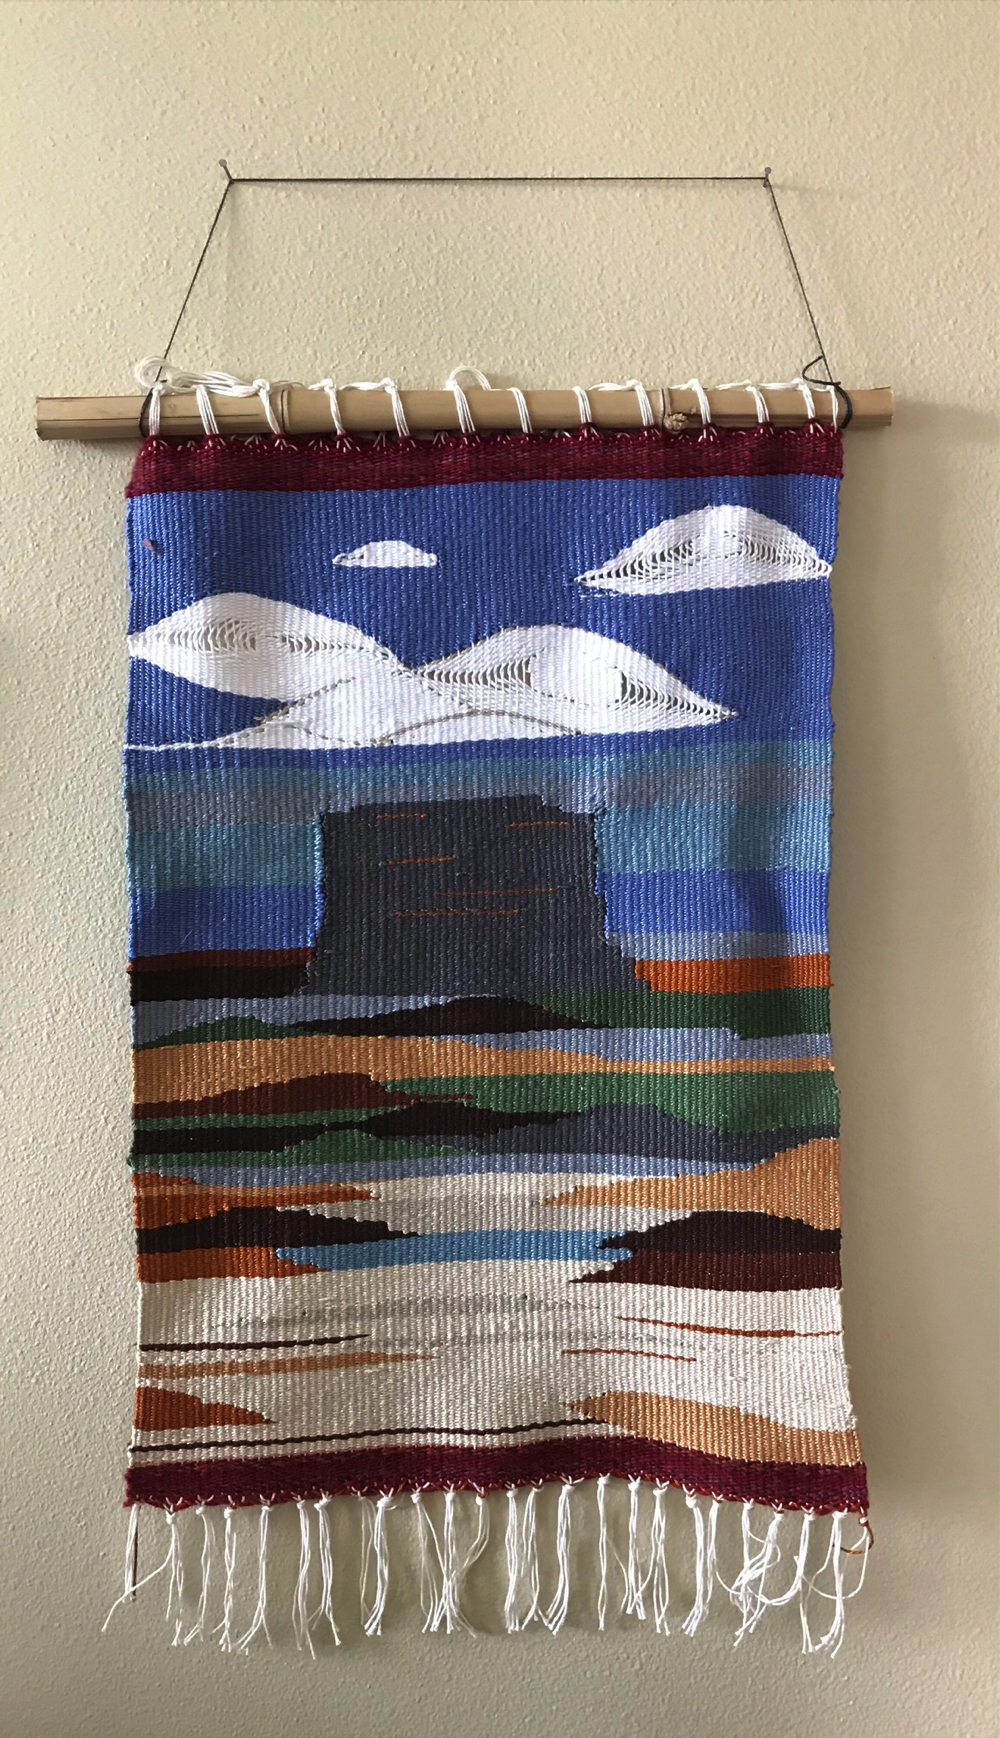 Weaving - Black Mesa (wall hanging)